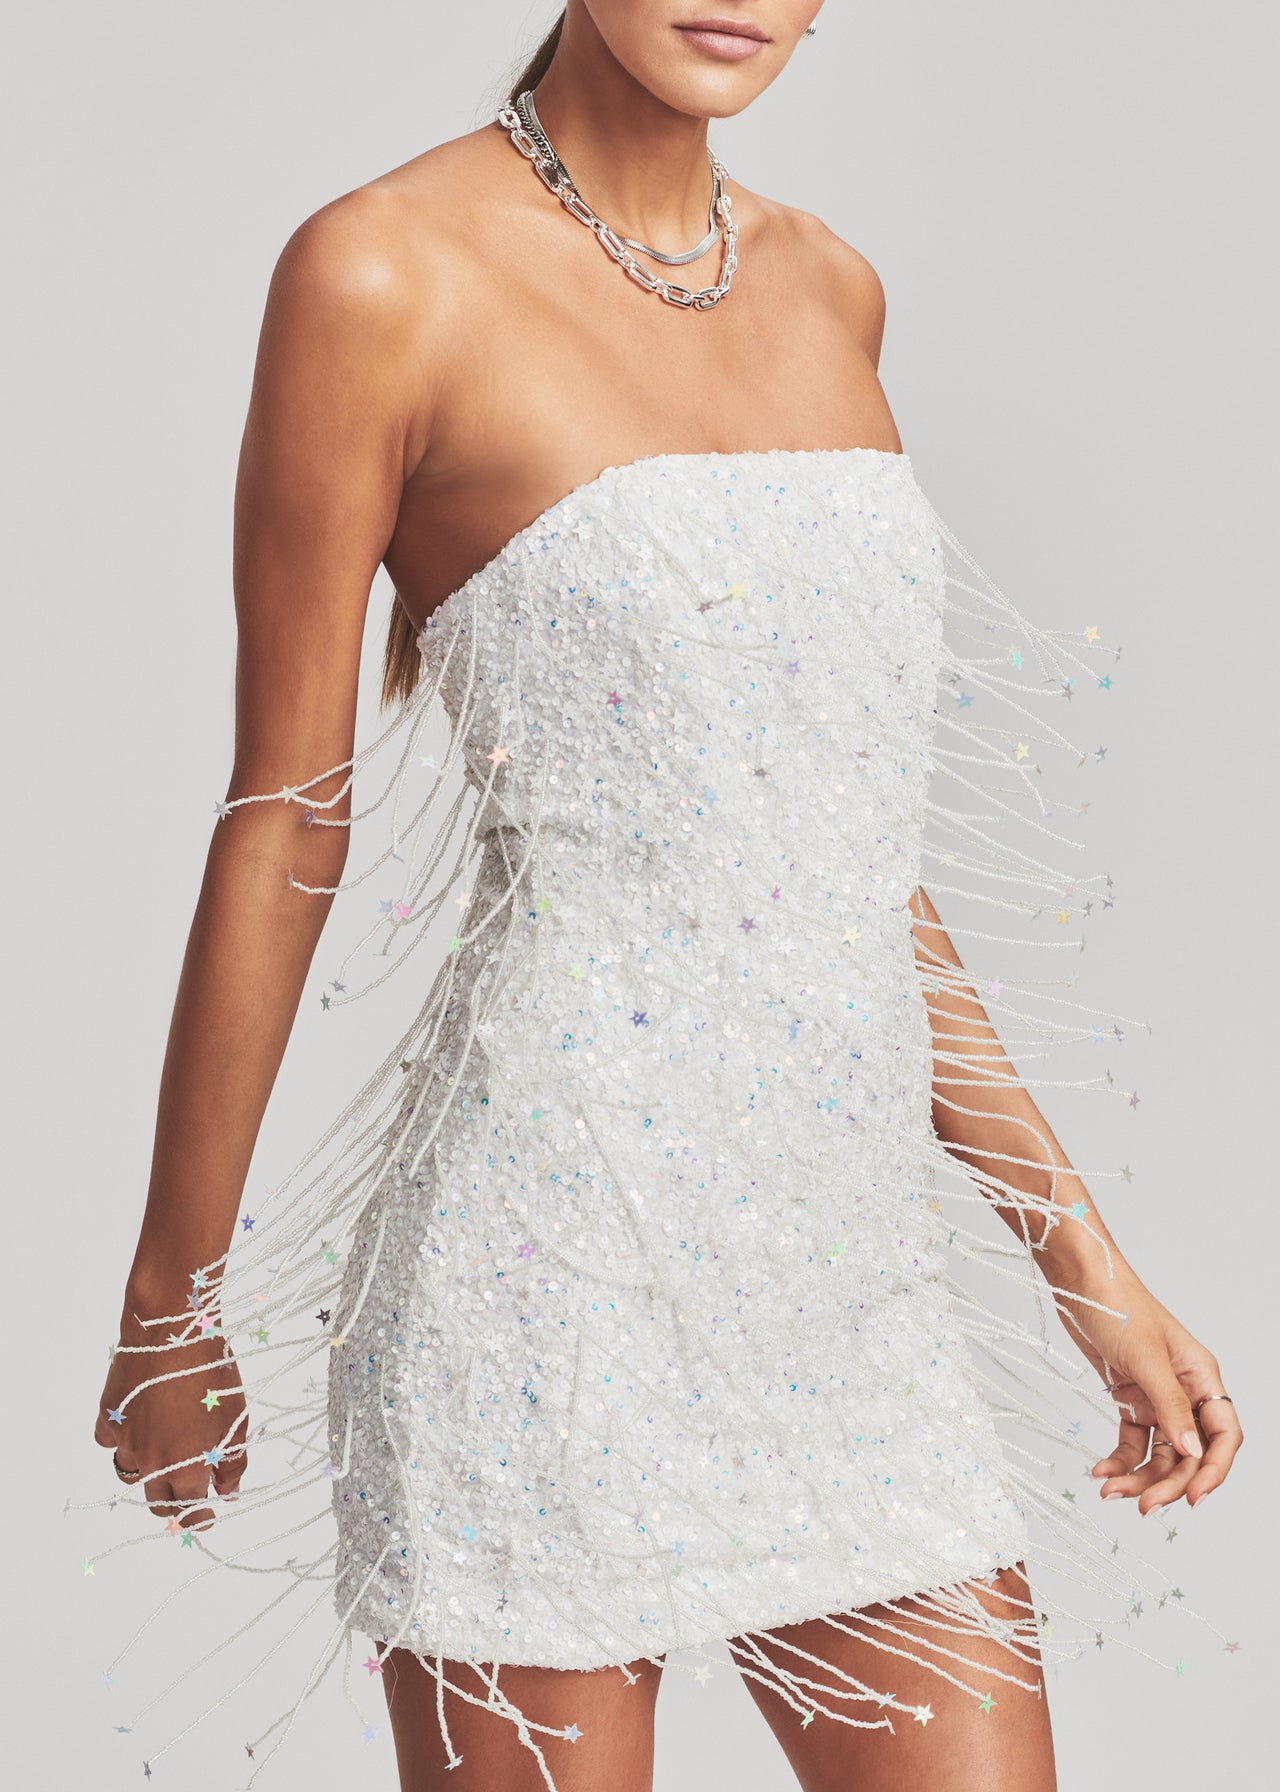 RETROFÉTE Women's Heather Sequin Star Fringe Dress White with Stars